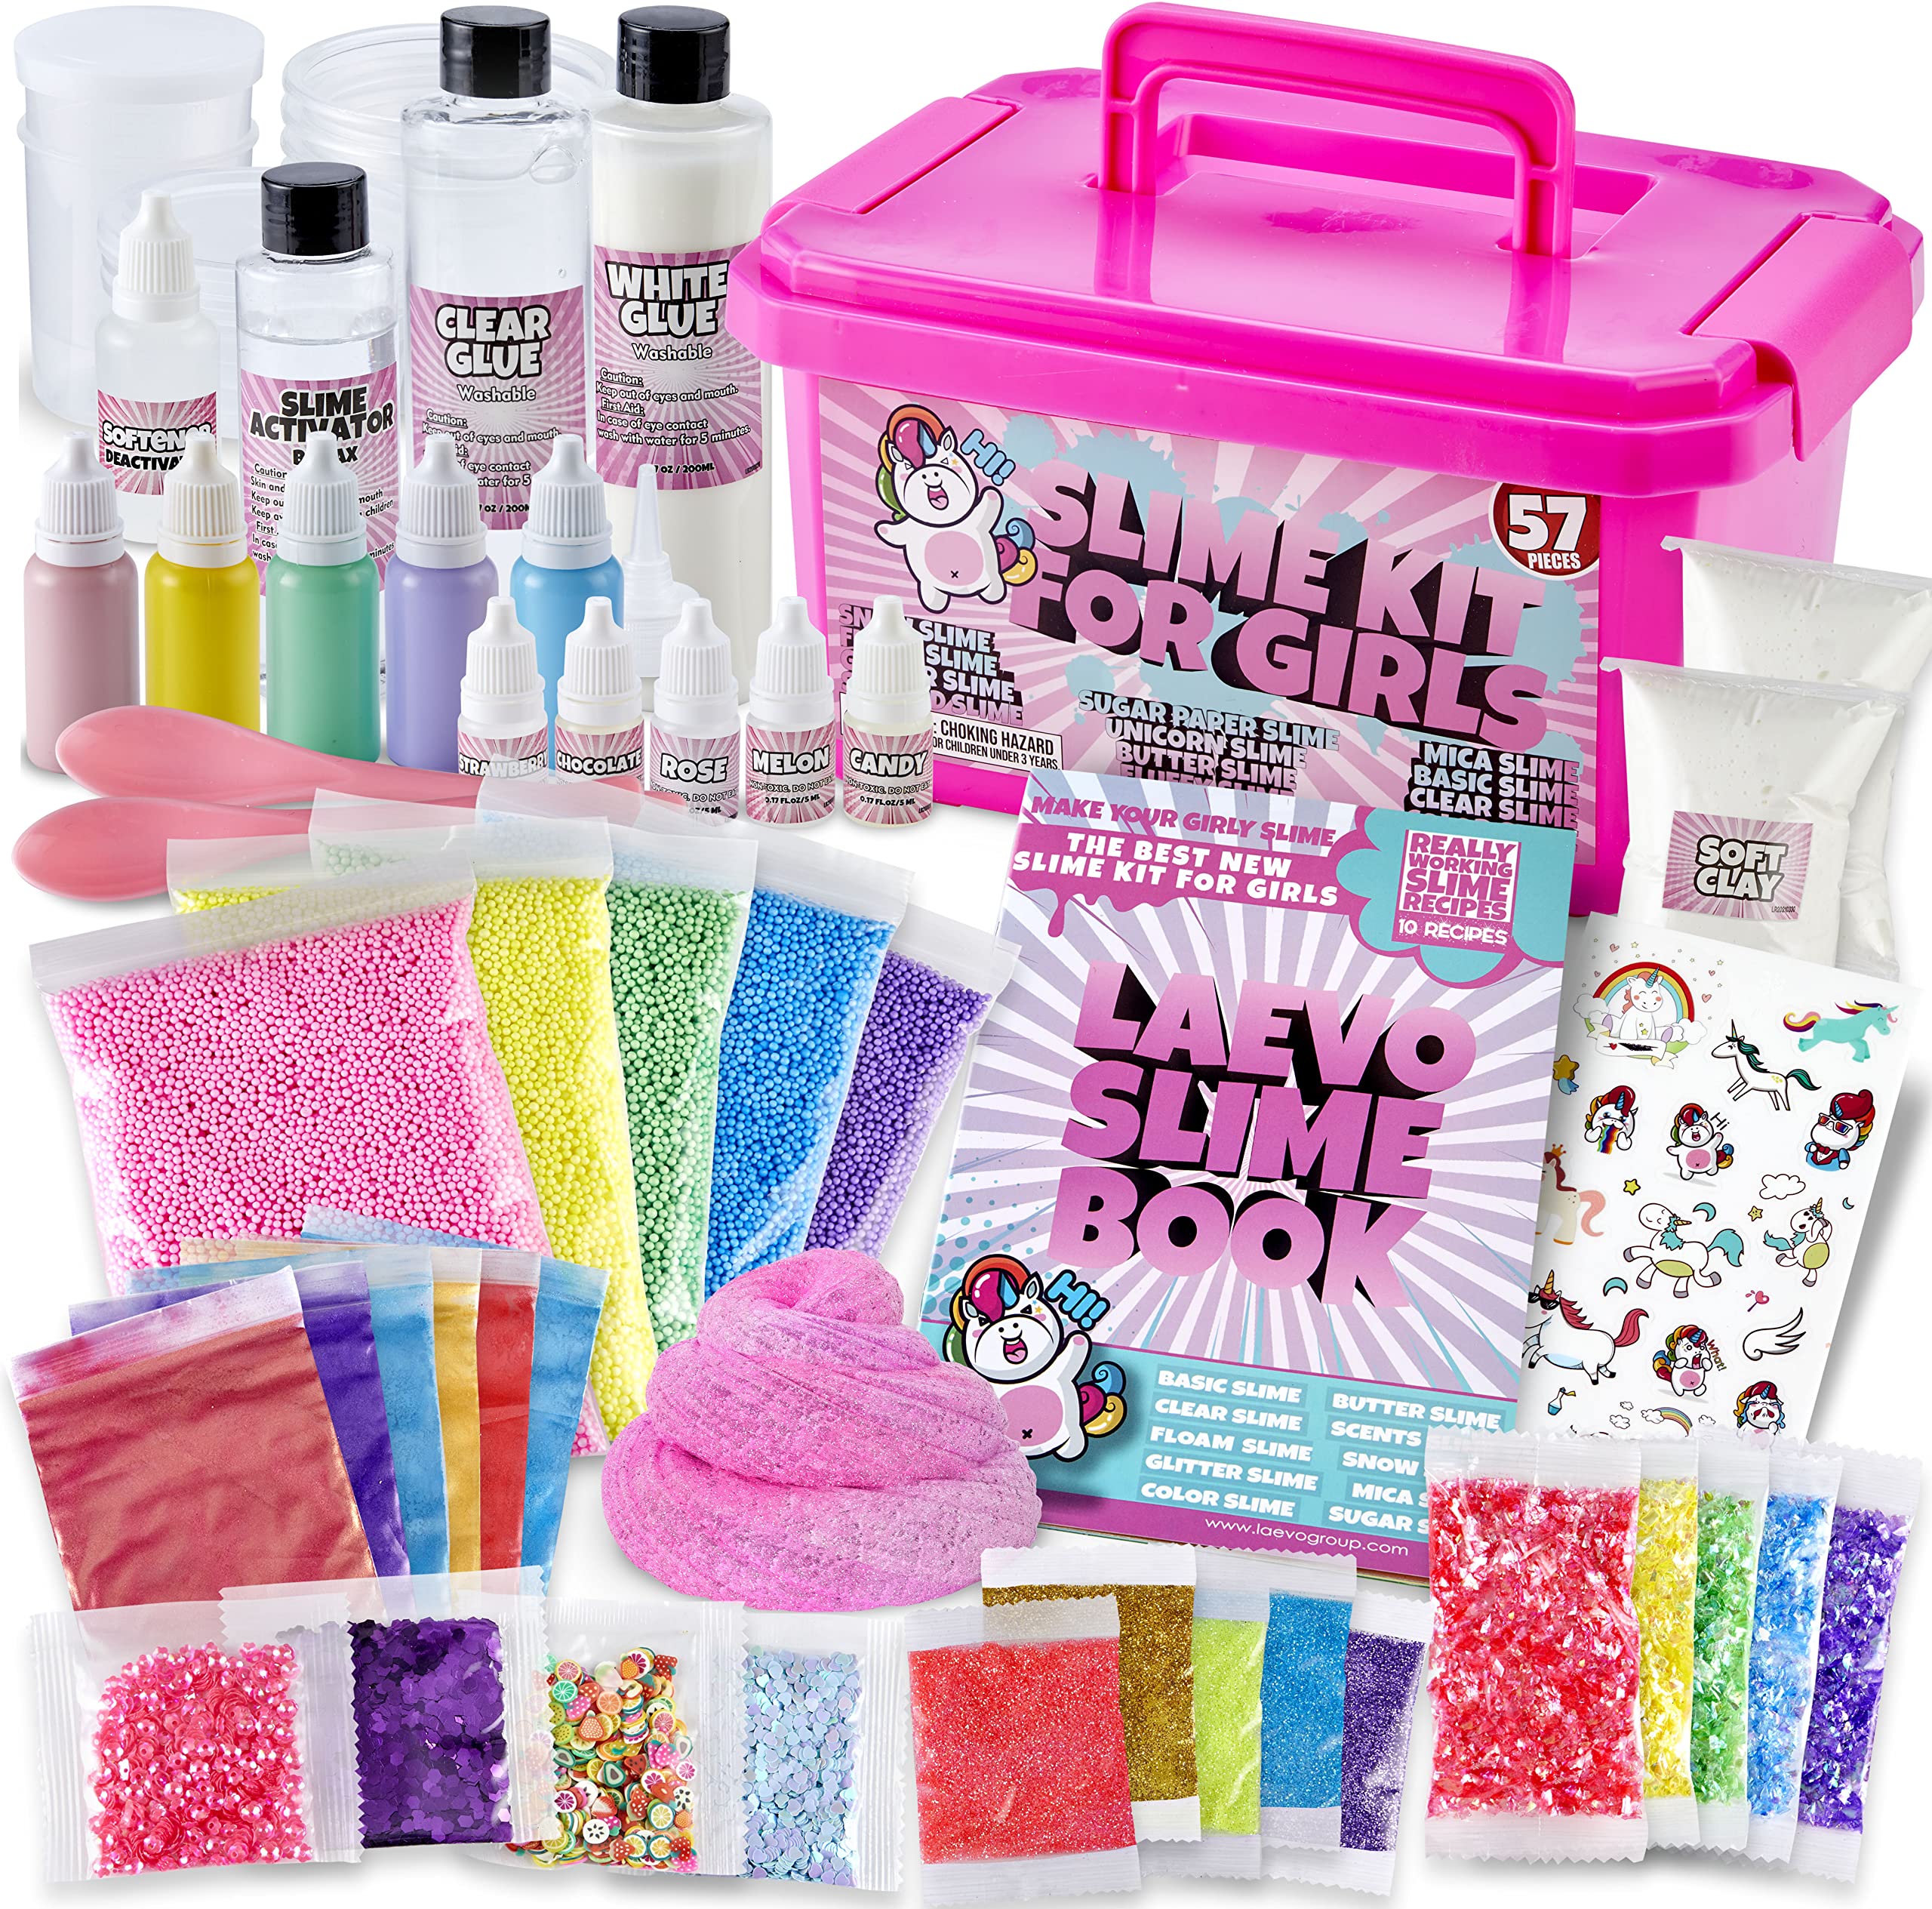 Laevo Unicorn Slime Kit for girls - DIY Slime Kits - Supplies Makes Butter  Slime, cloud Slime, clear Slime & More Sets - Toys fo